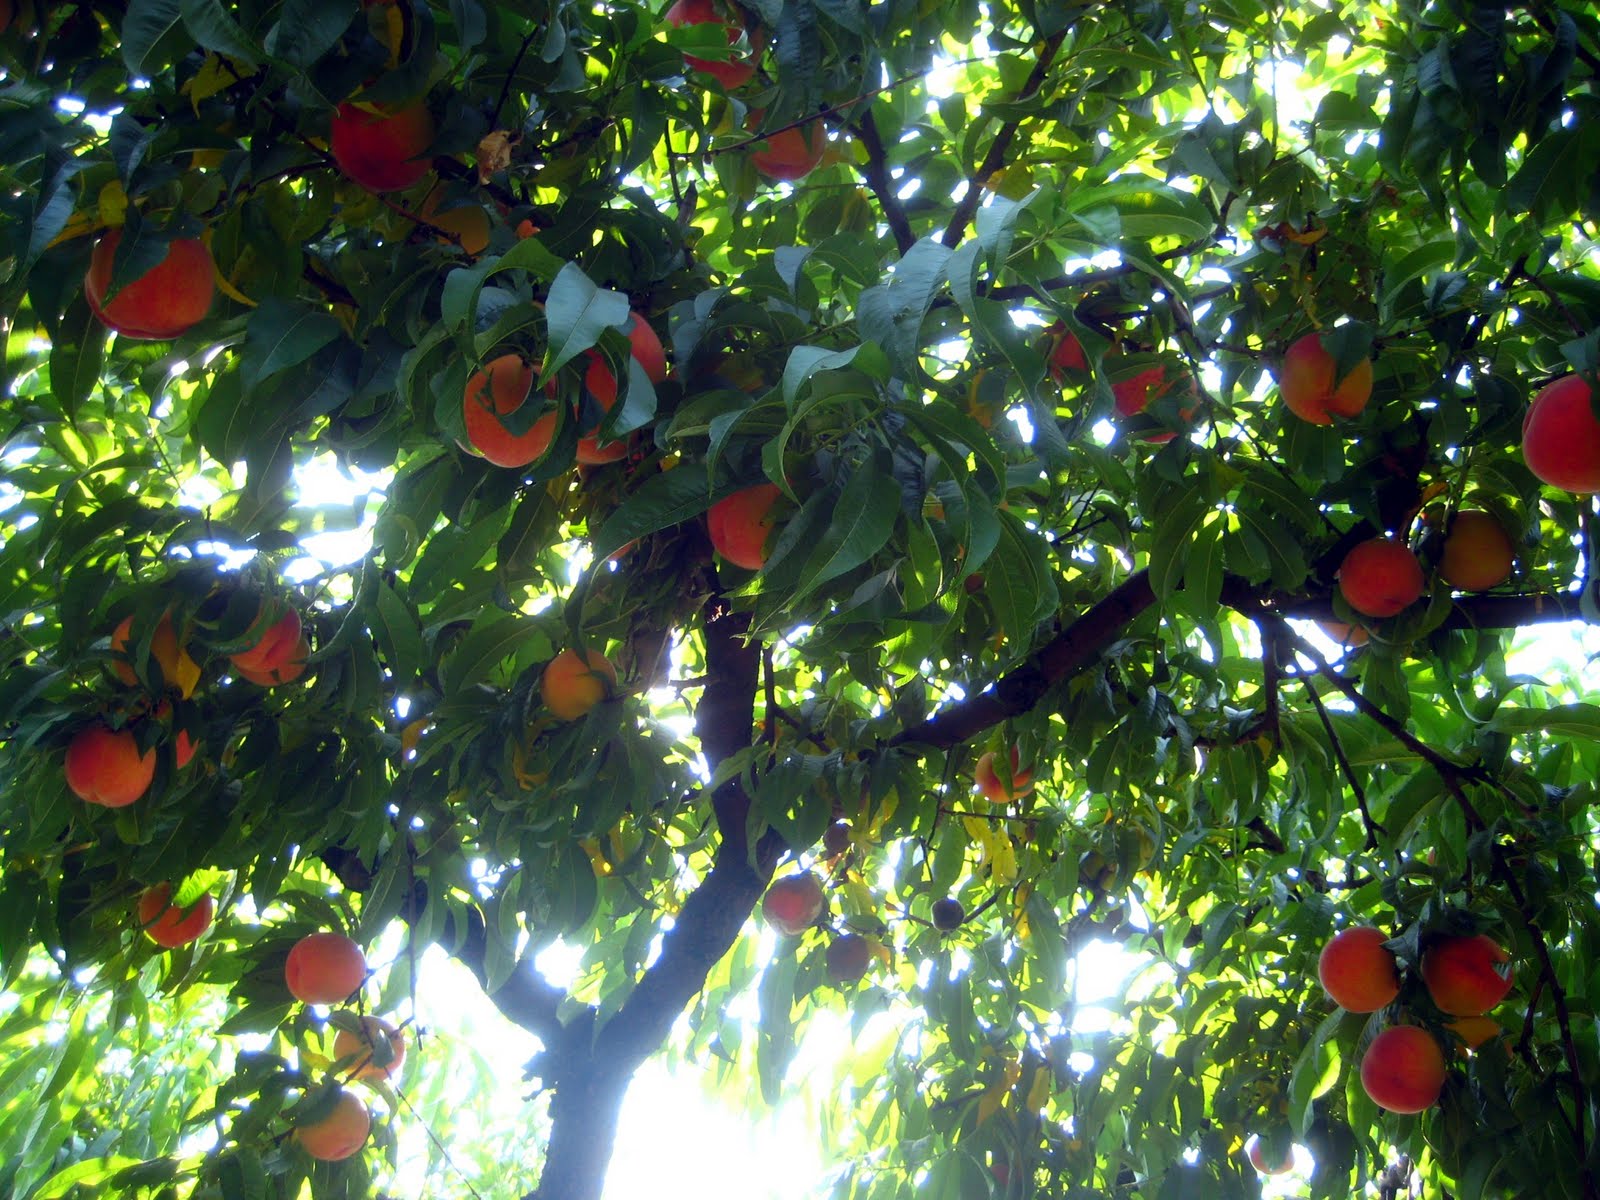 millions of peaches